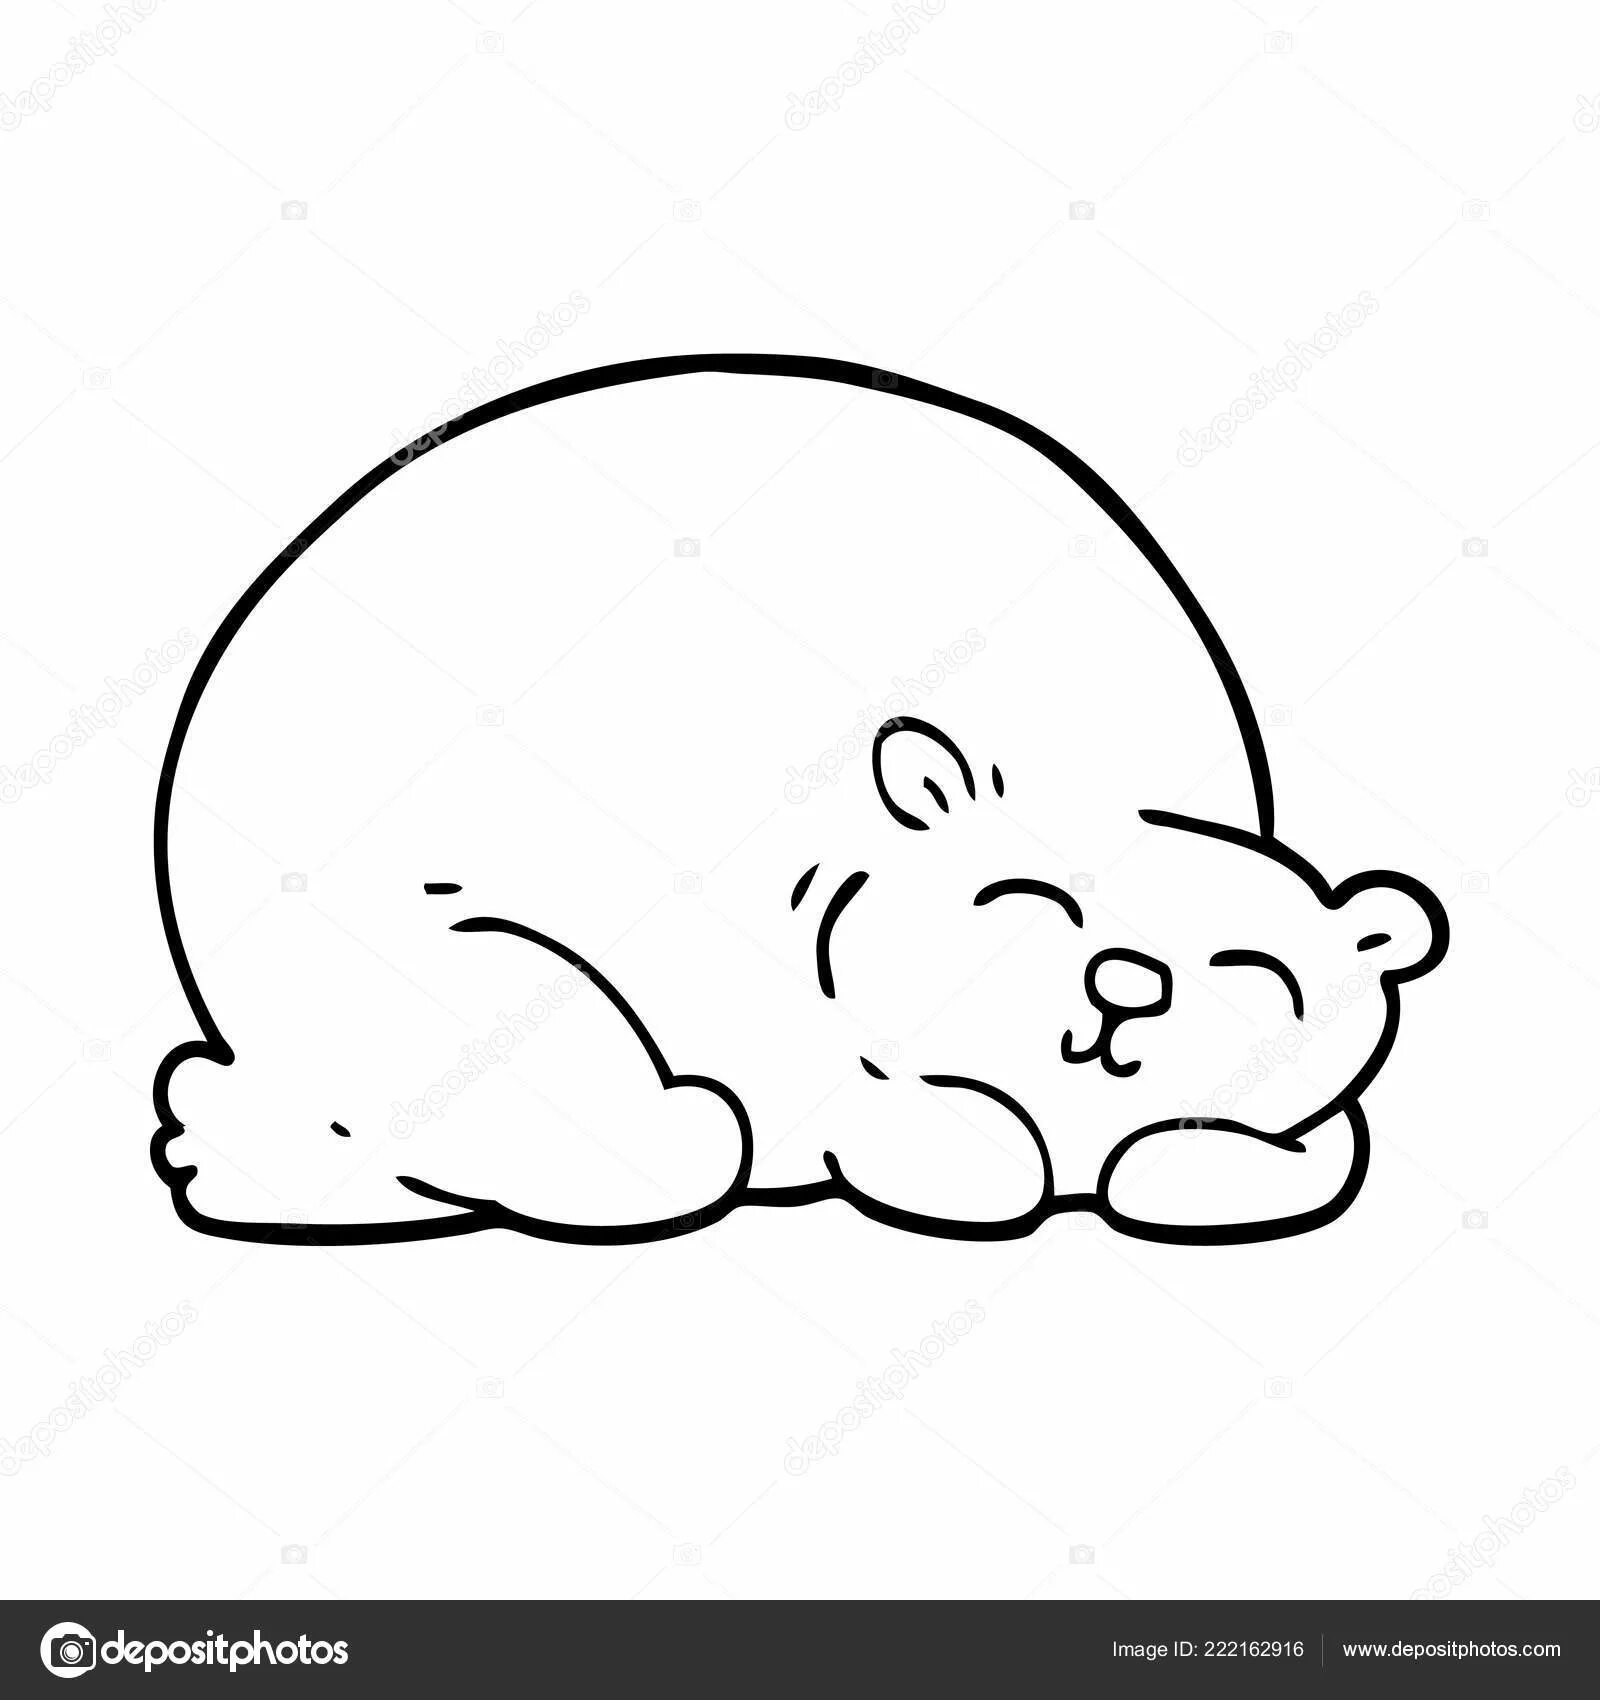 Jubilant coloring page: почему медведи спят зимой?